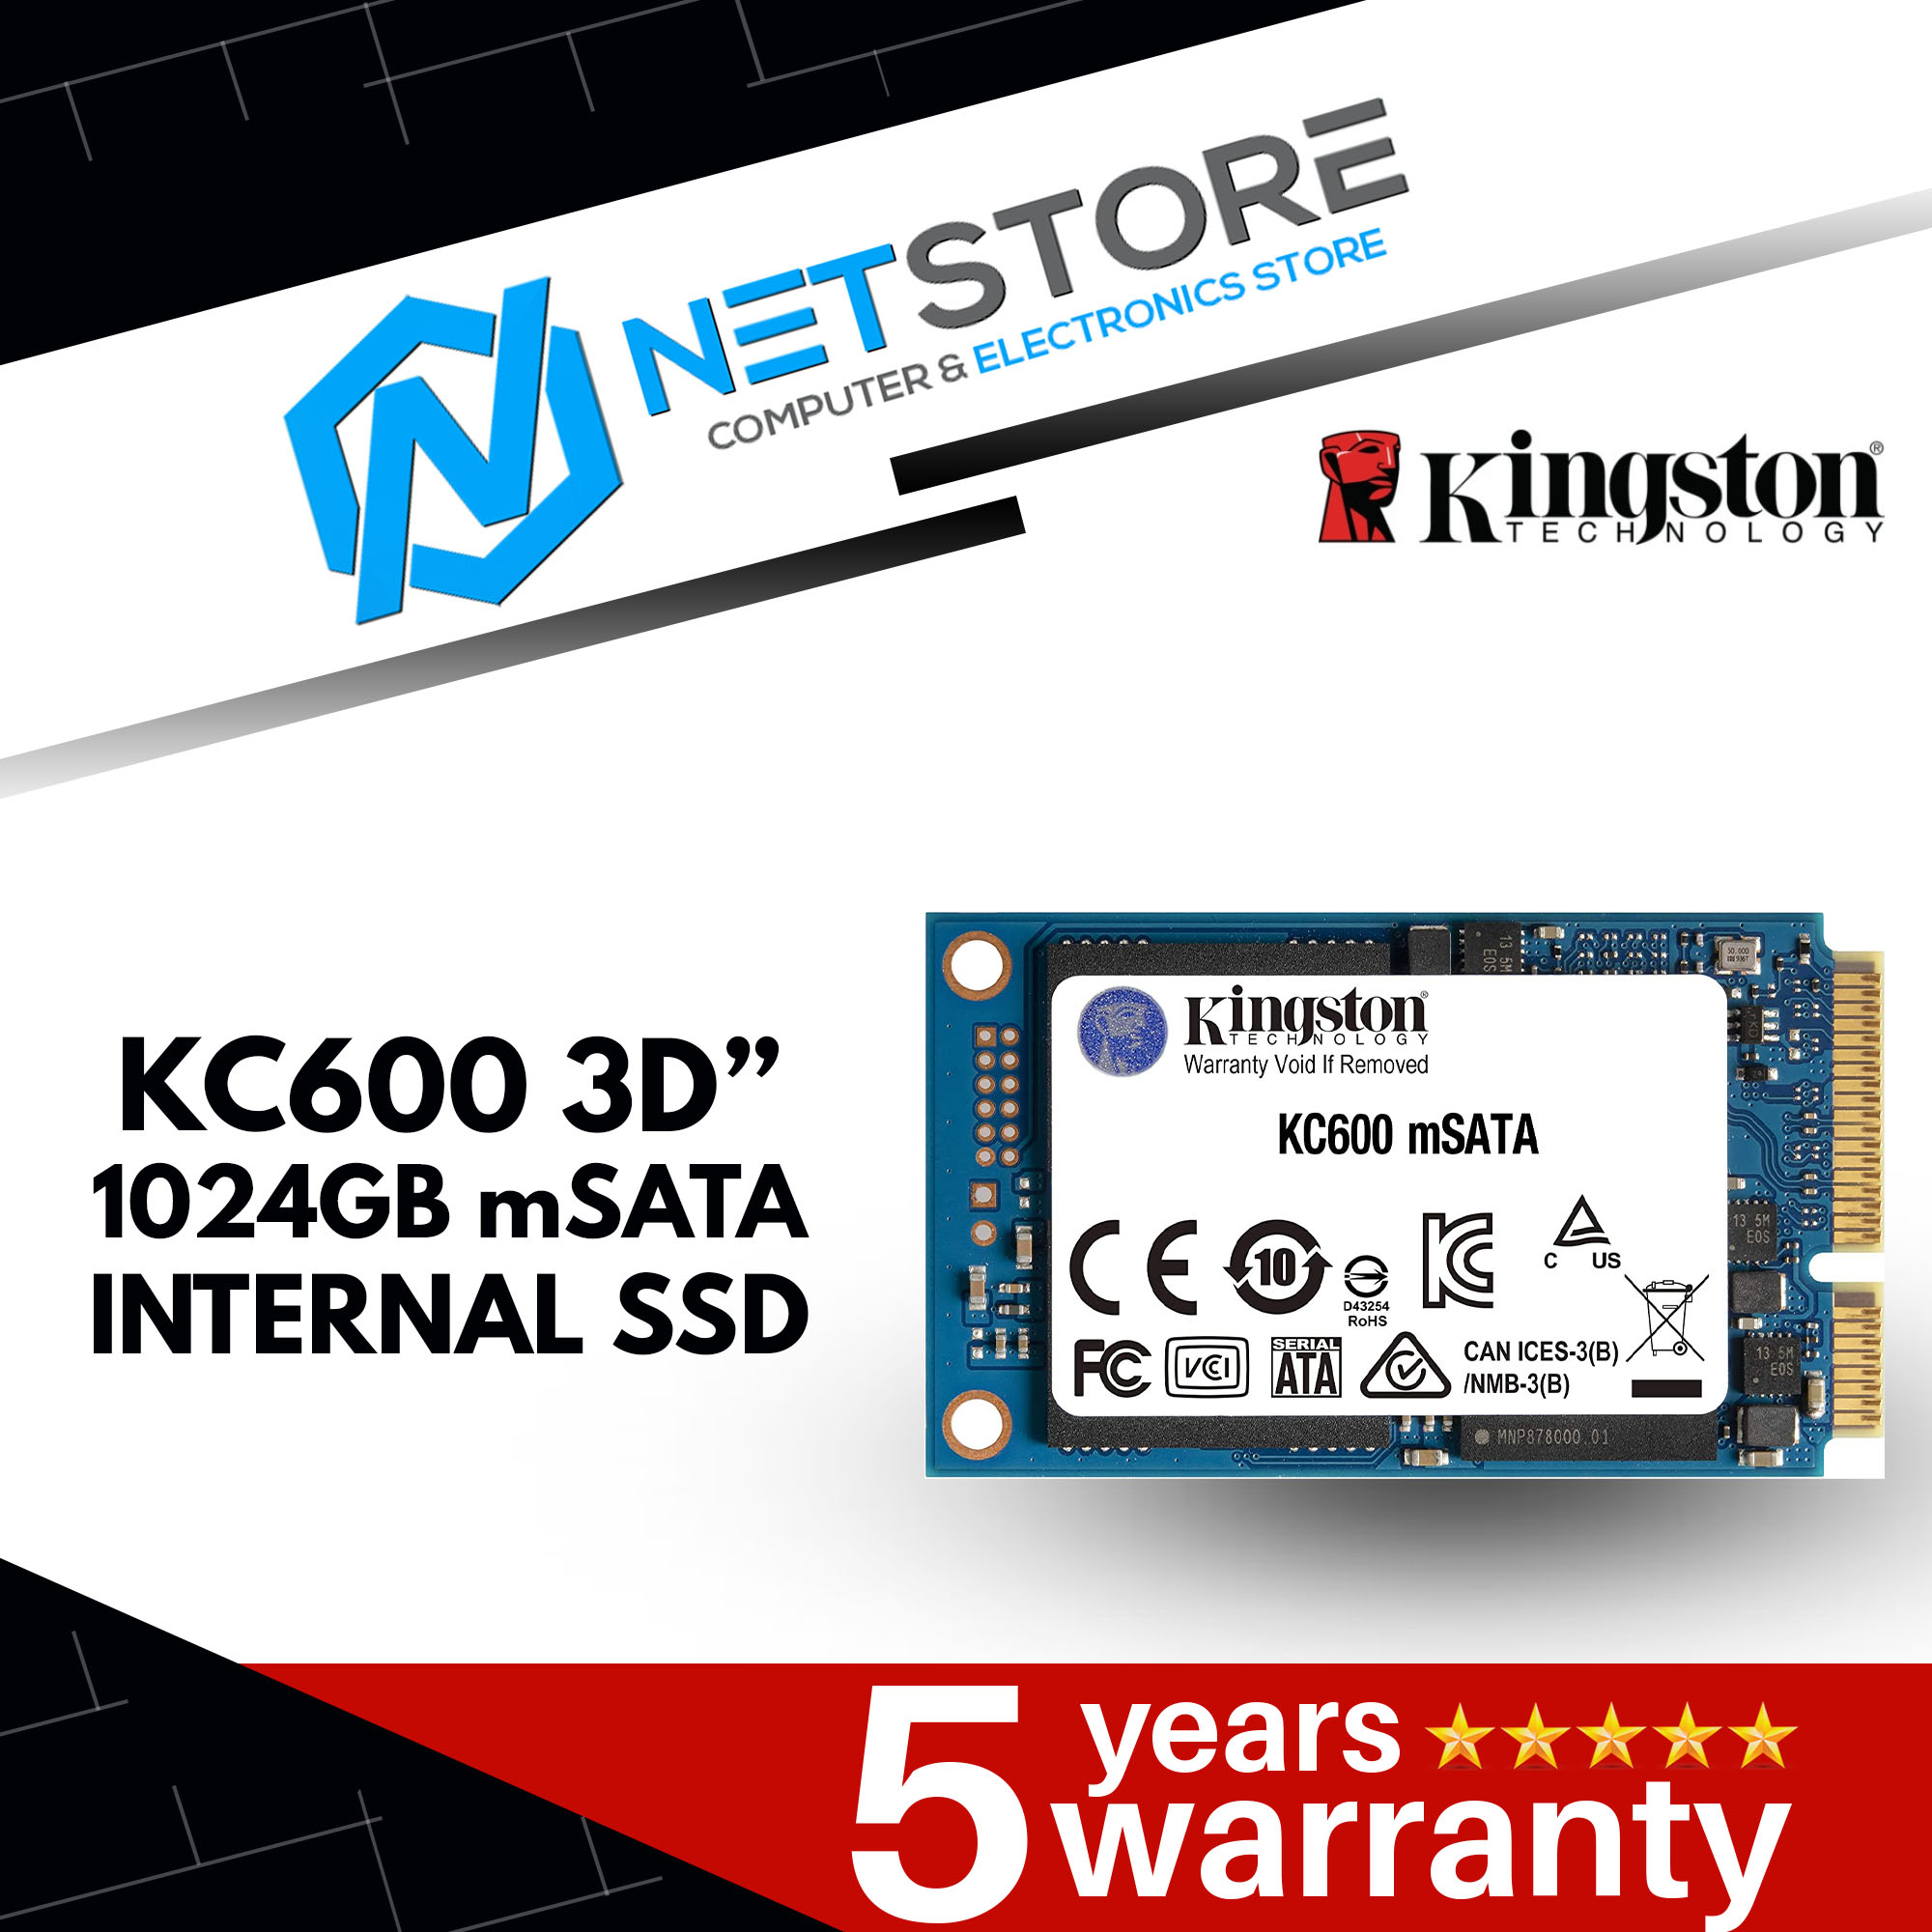 KINGSTON KC600 3D&#8221; 1024GB mSATA INTERNAL SSD - SKC600MS/1024G